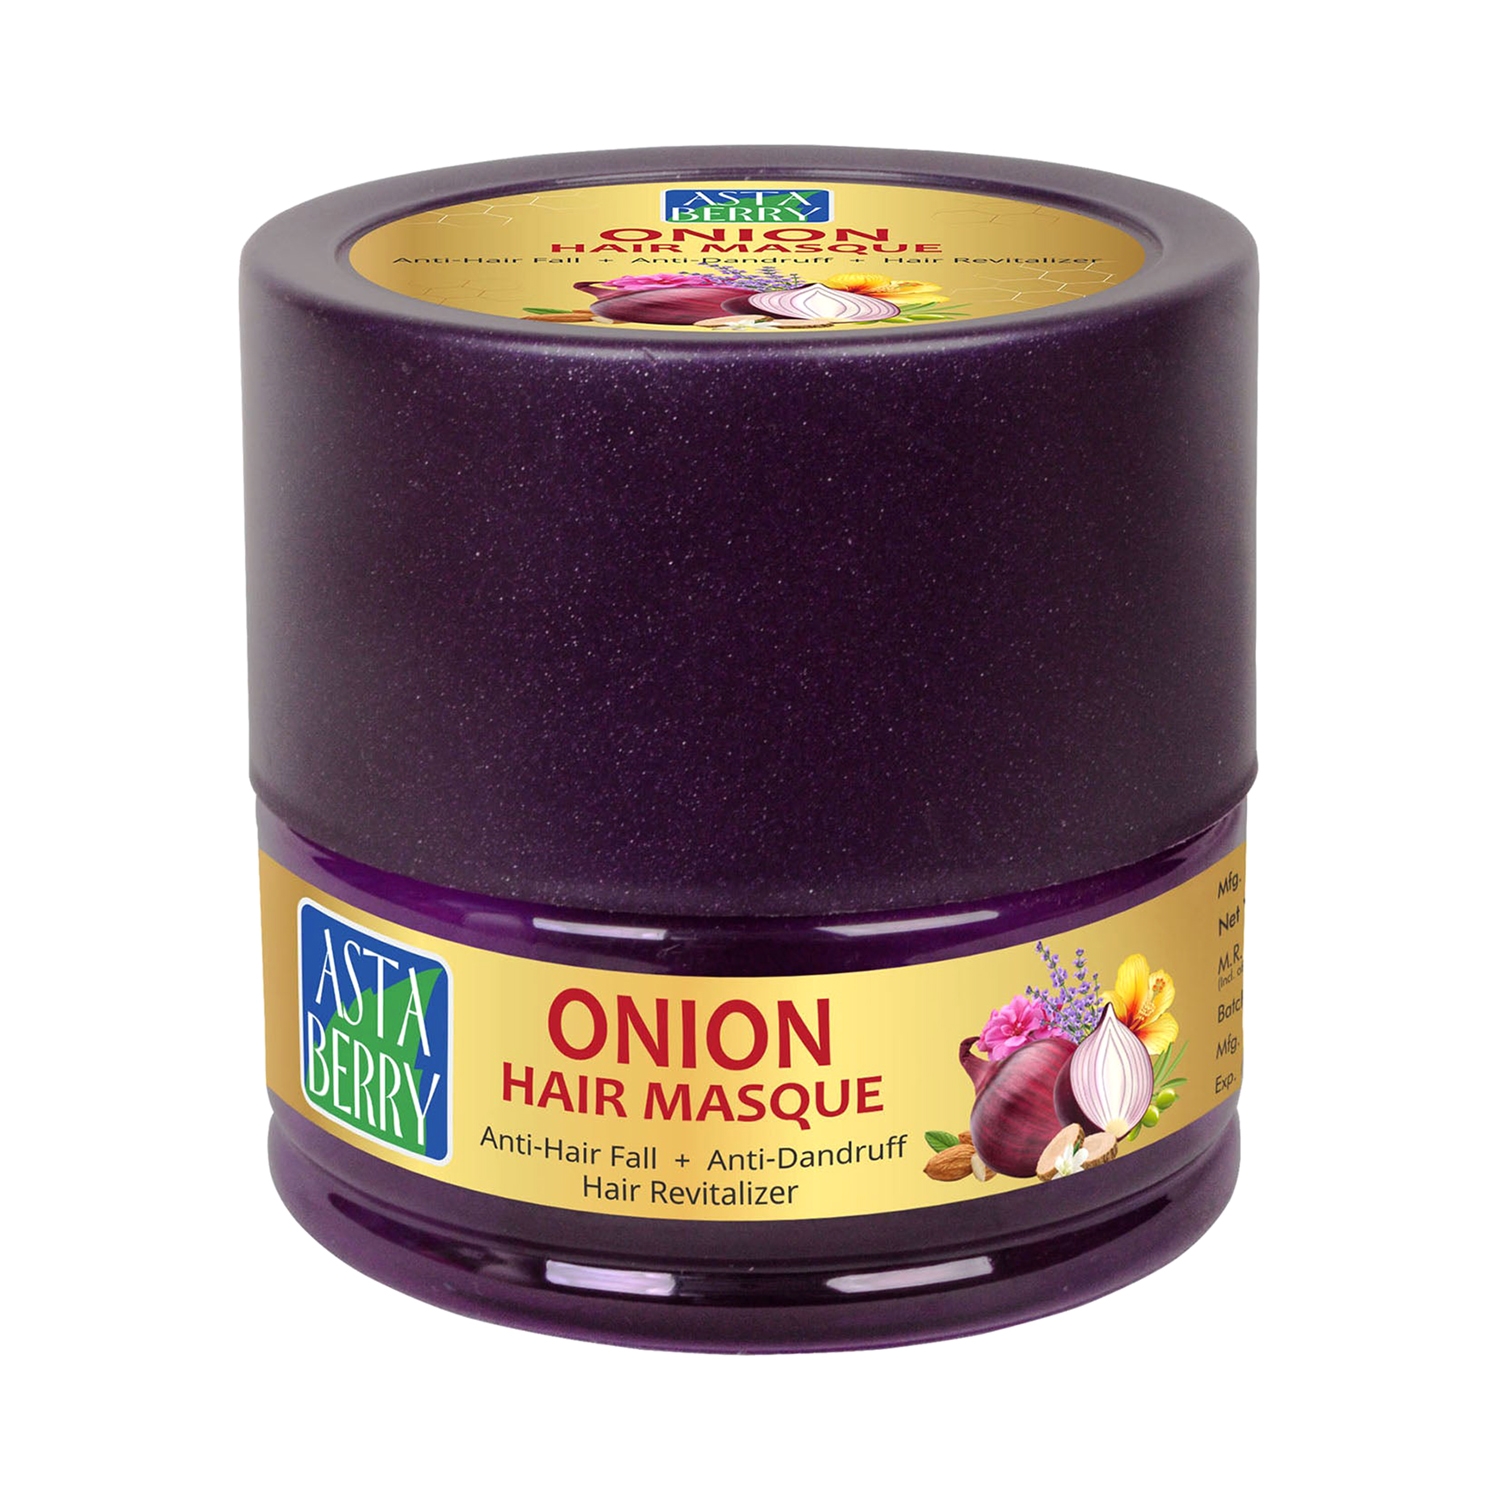 Astaberry | Astaberry Onion Hair Masque (200ml)